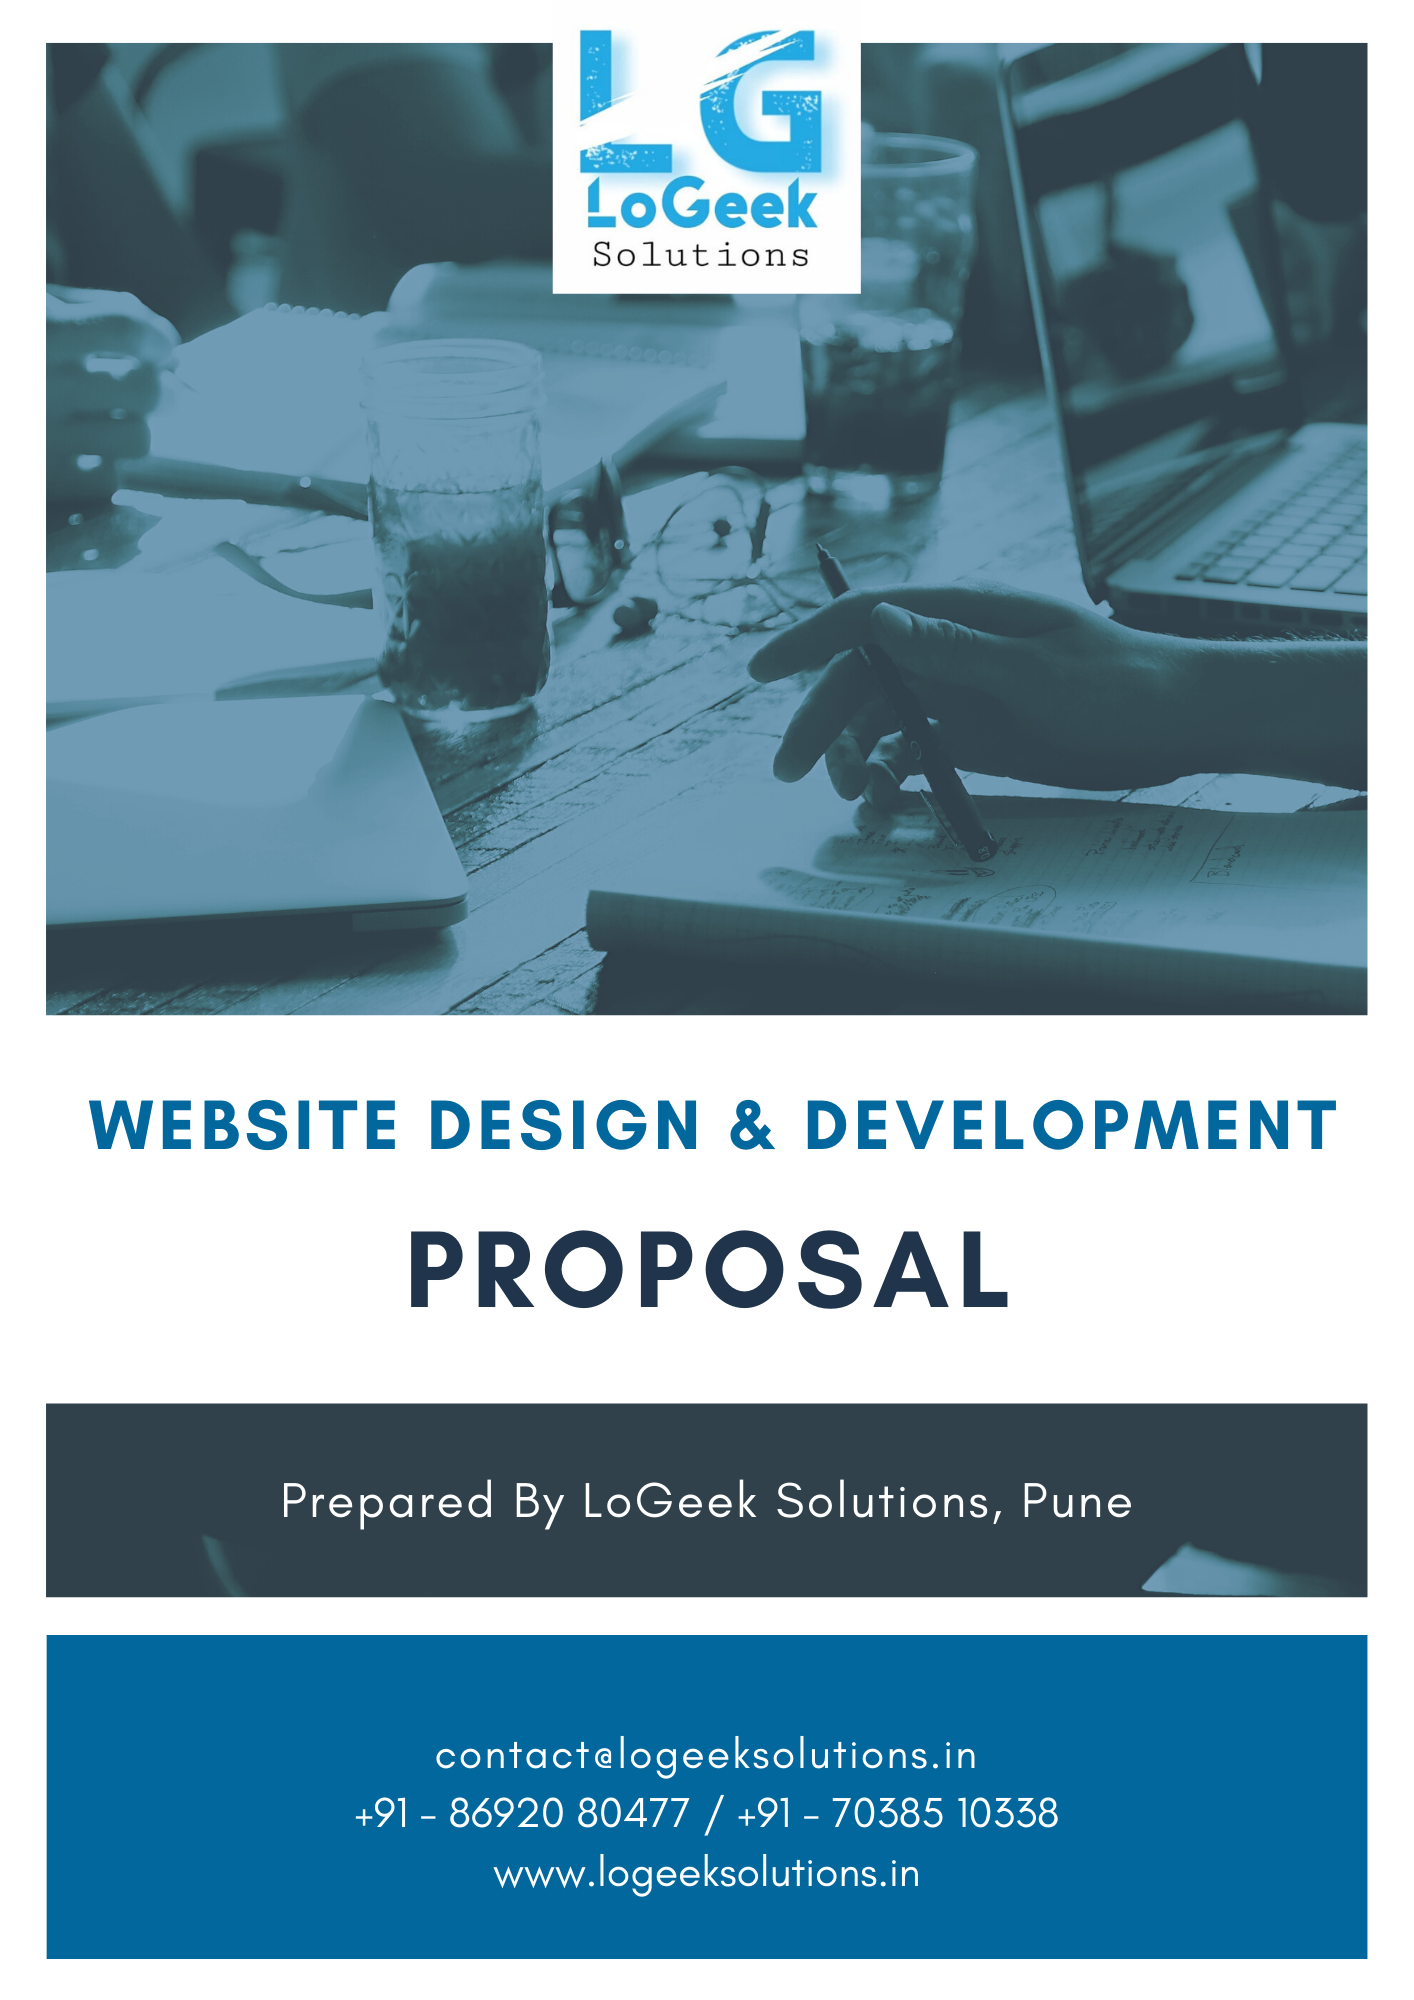 Web Design Proposal